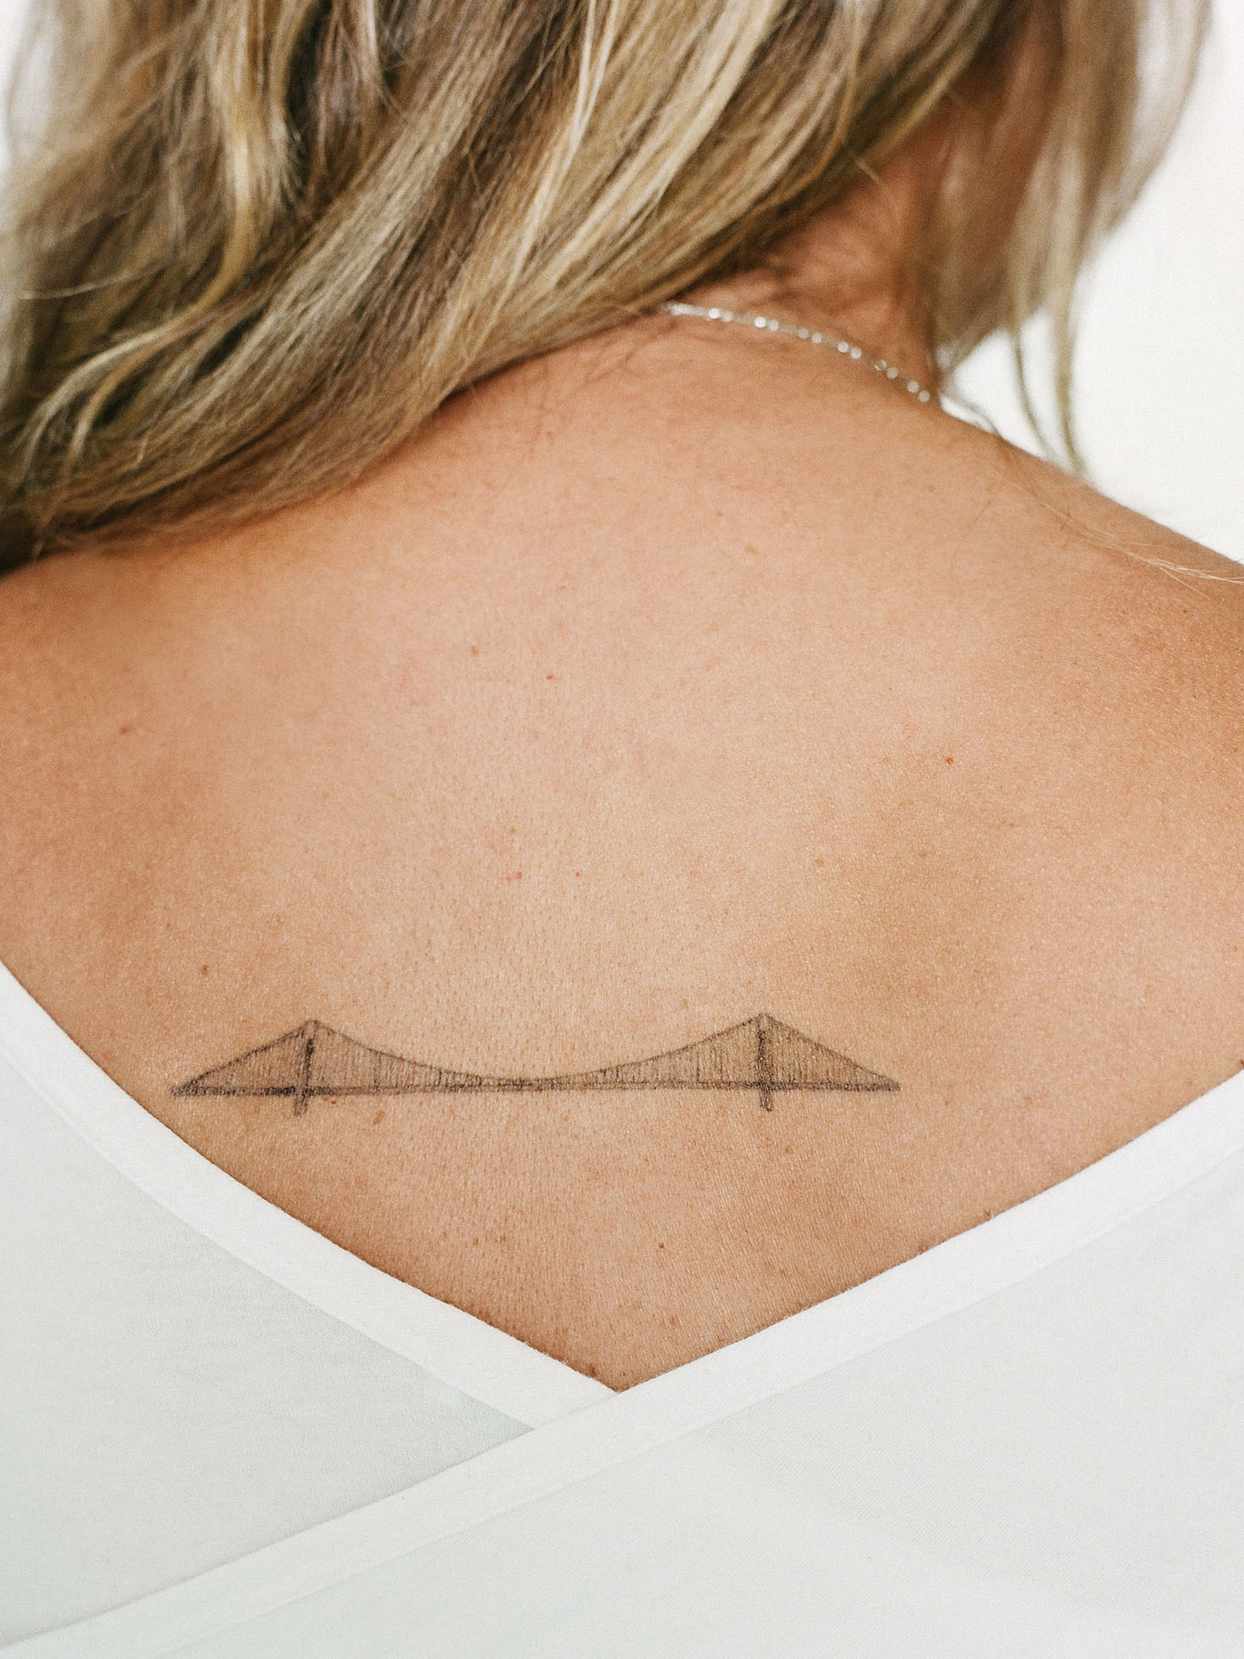 woman with back tattoo of bridge